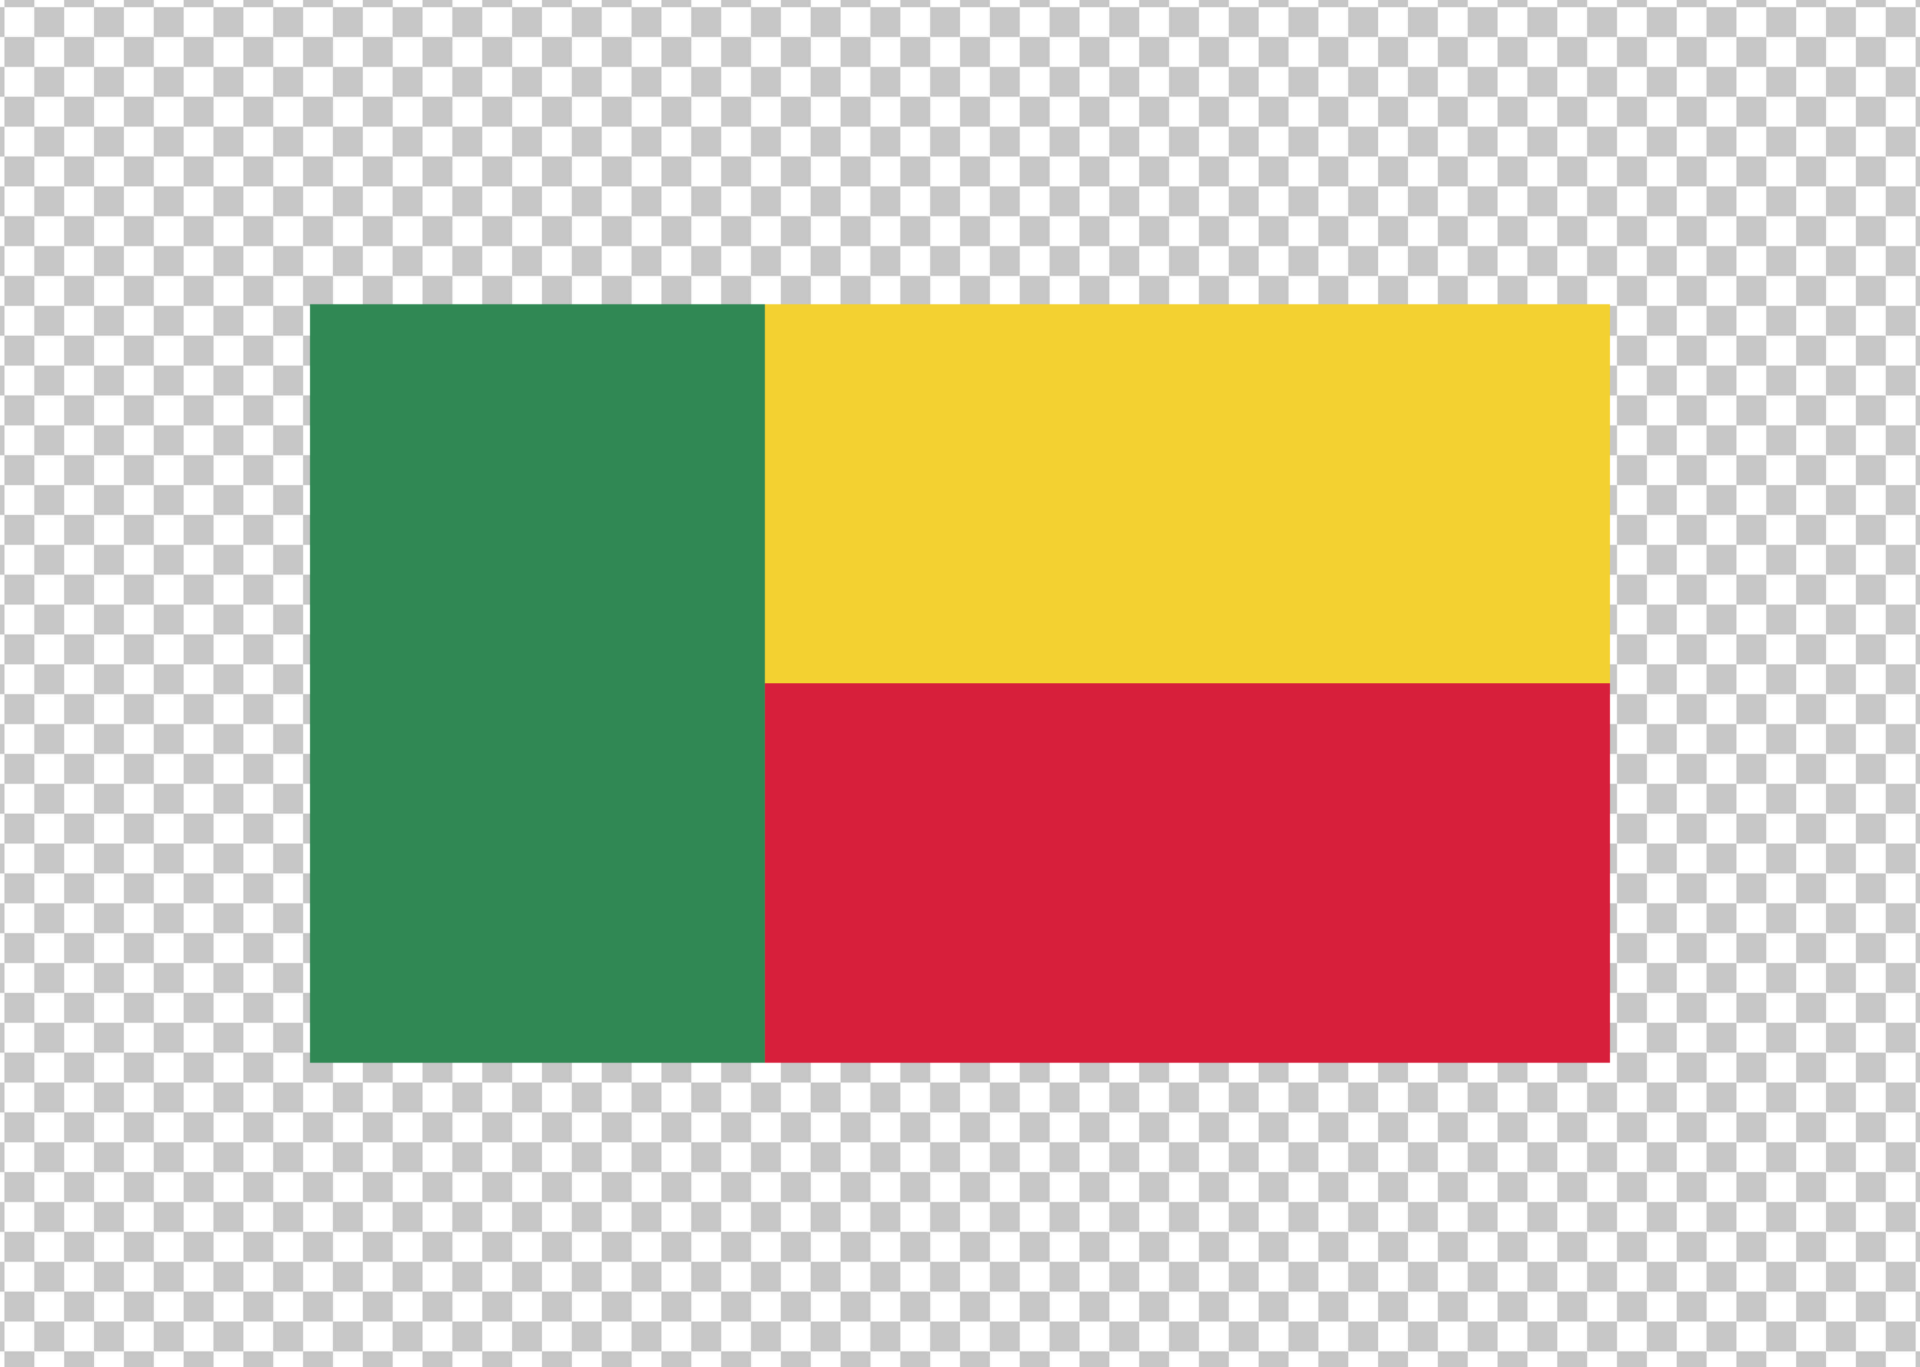 Flag of Benin PNG Image